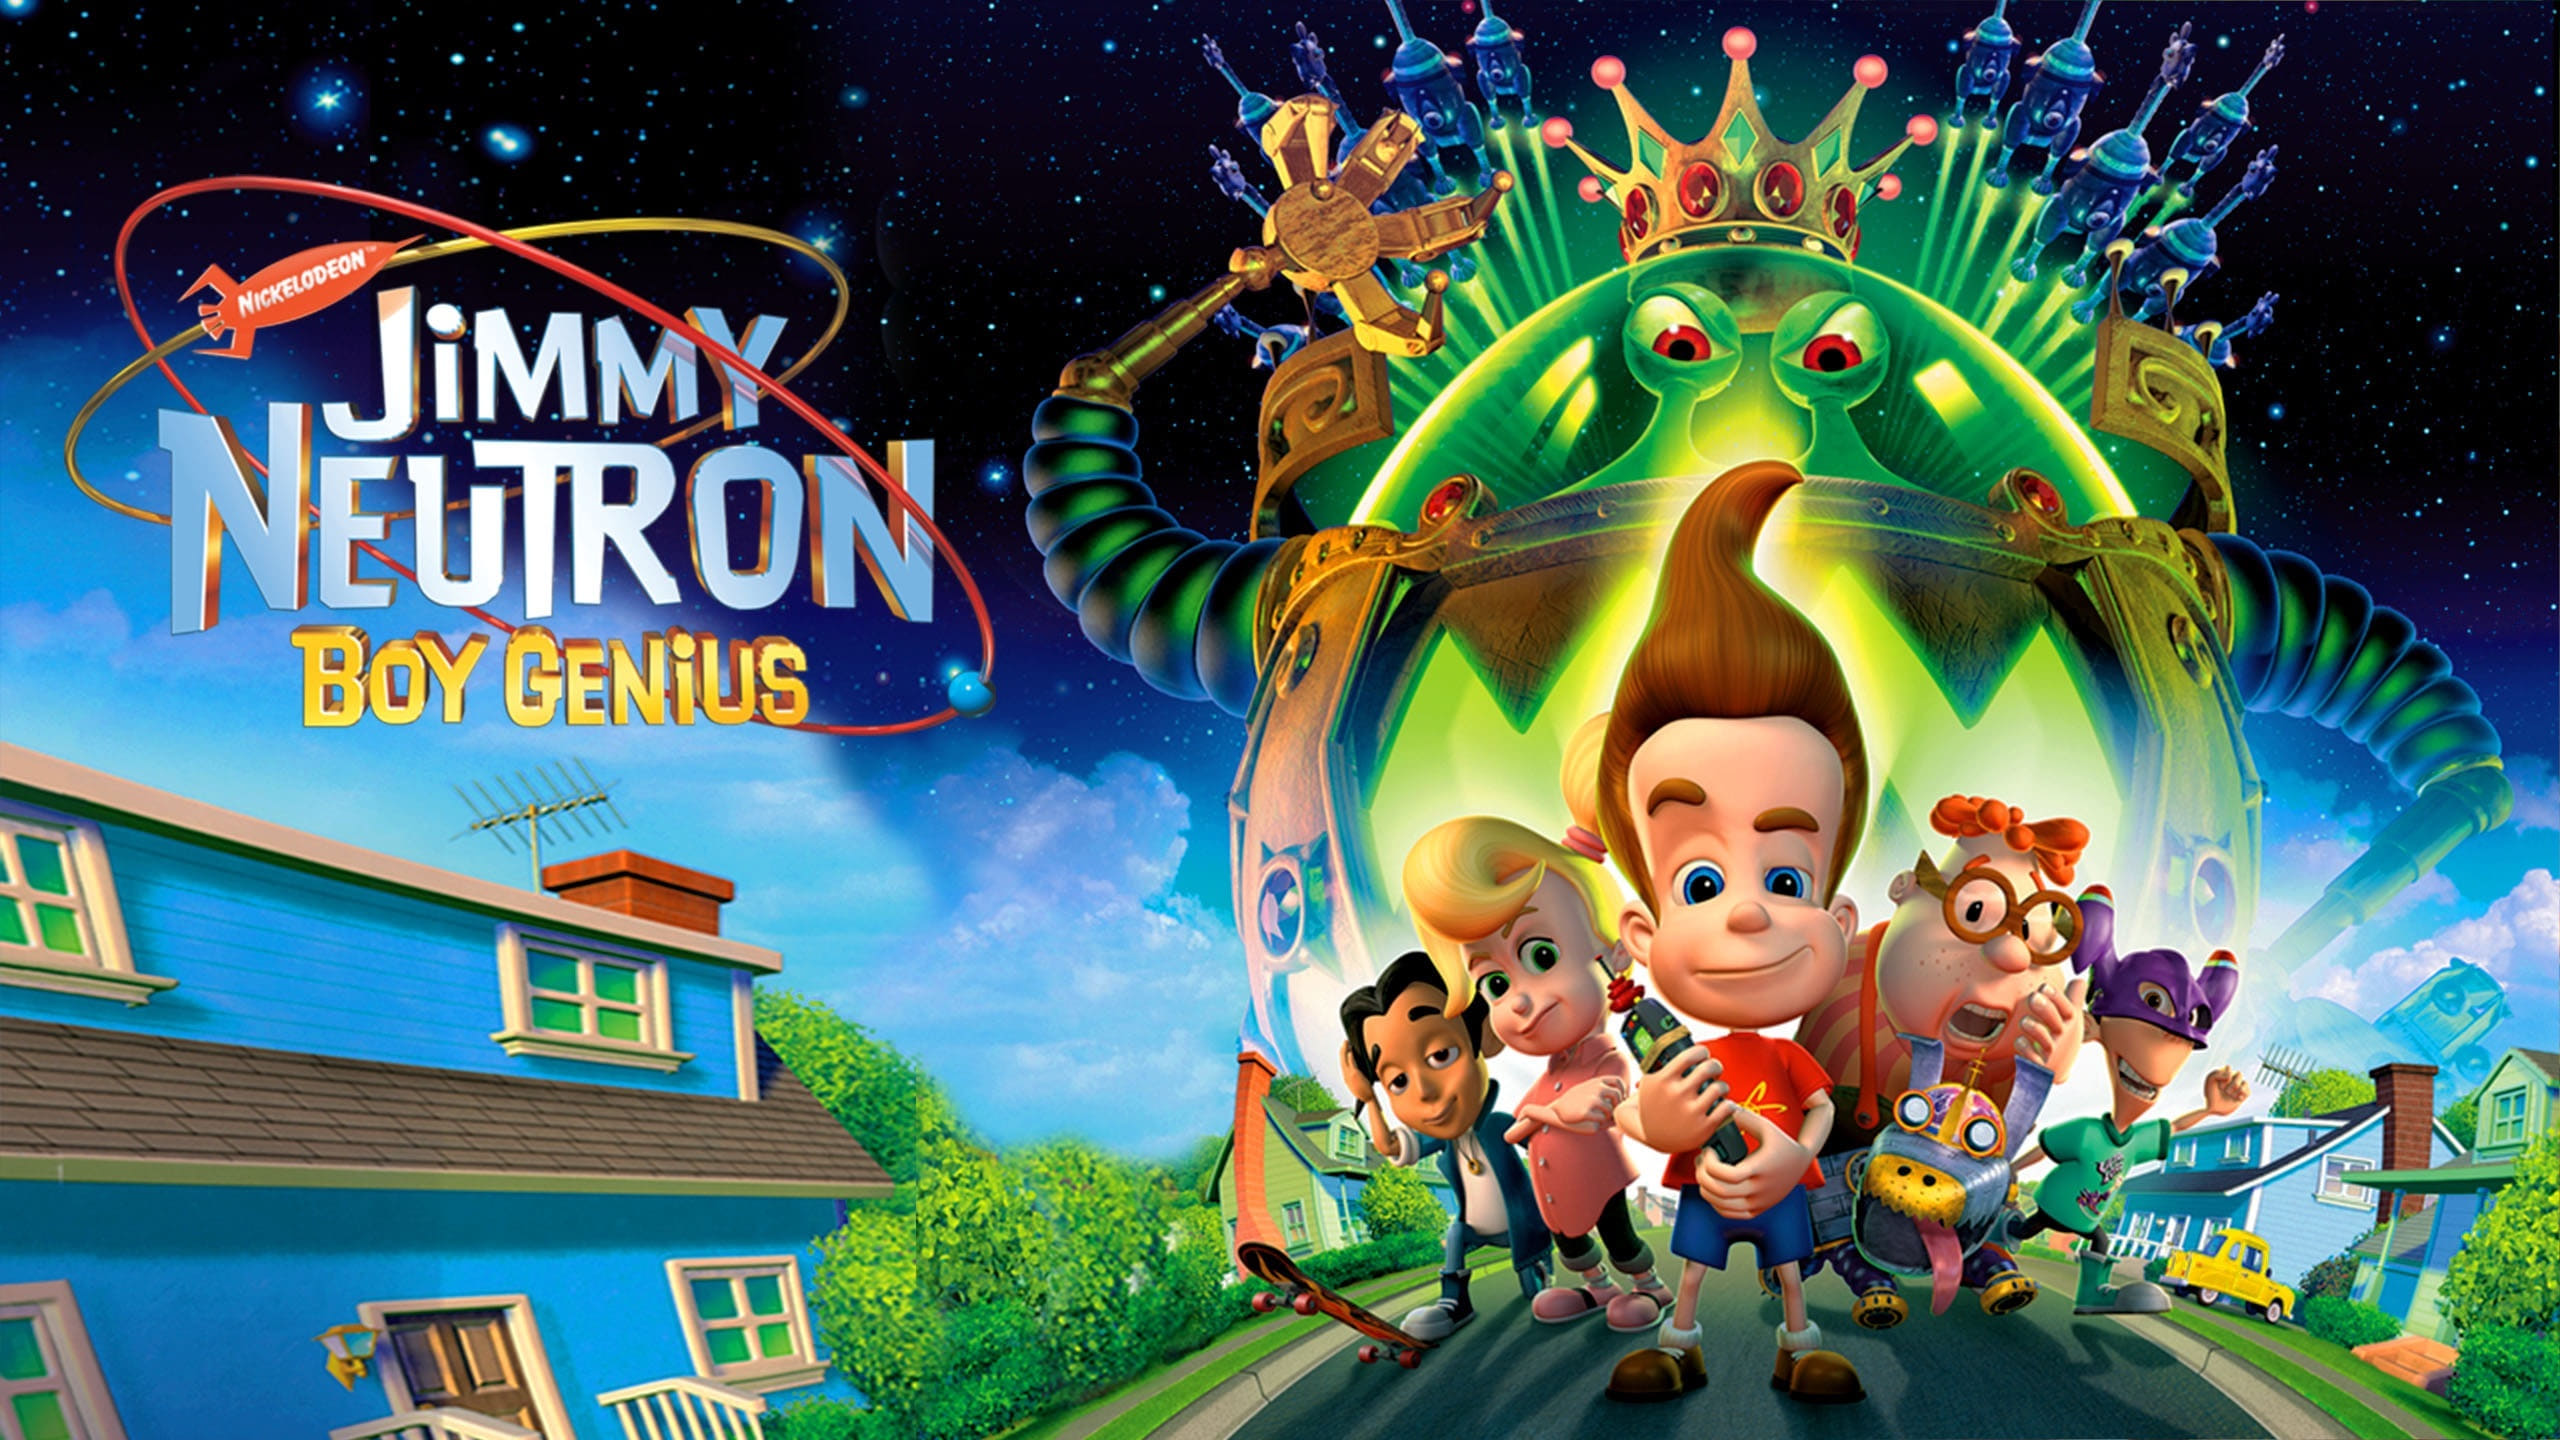 Watch Jimmy Neutron: Boy Genius Full Movie Online, Release Date, Trailer, Cast and Songs